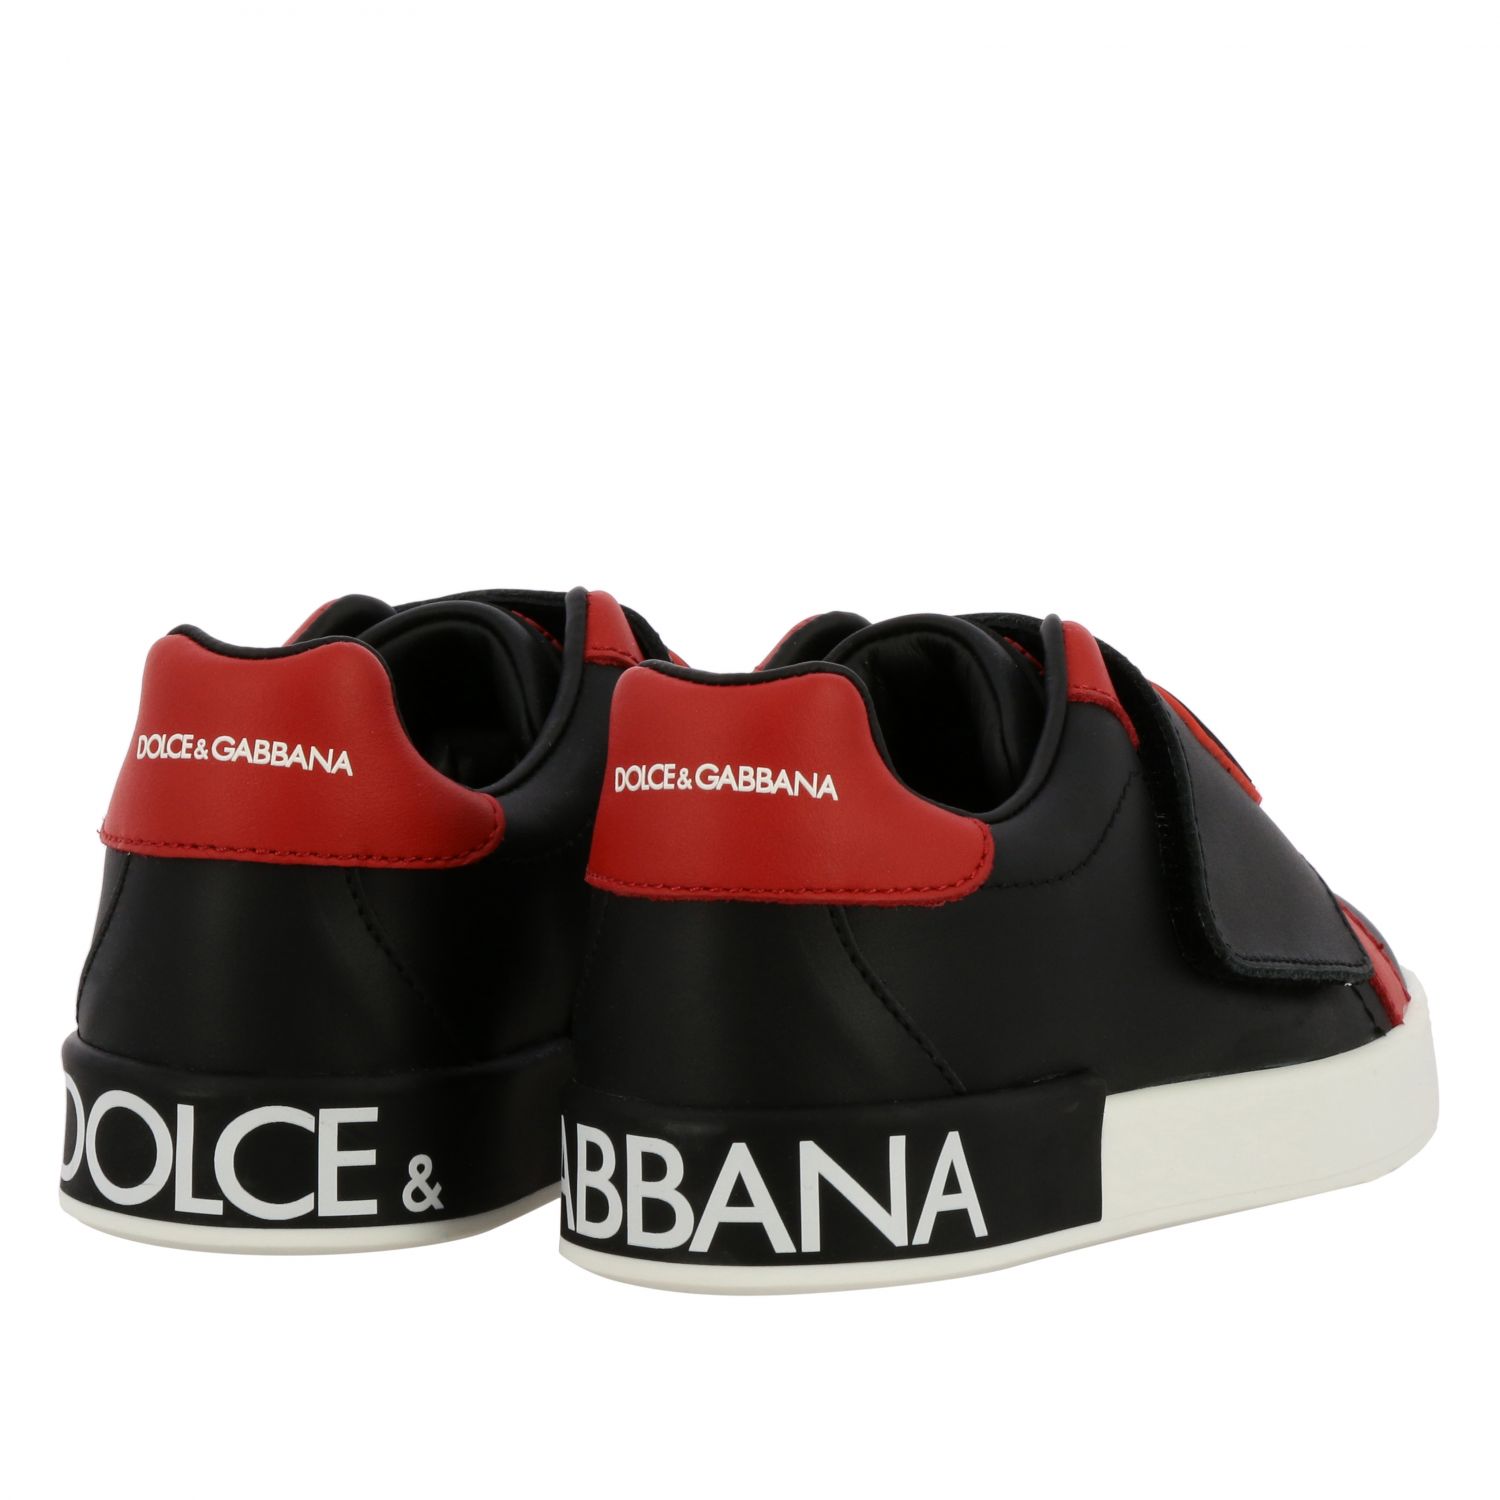 Dolce \u0026 Gabbana shoes with maxi logo 